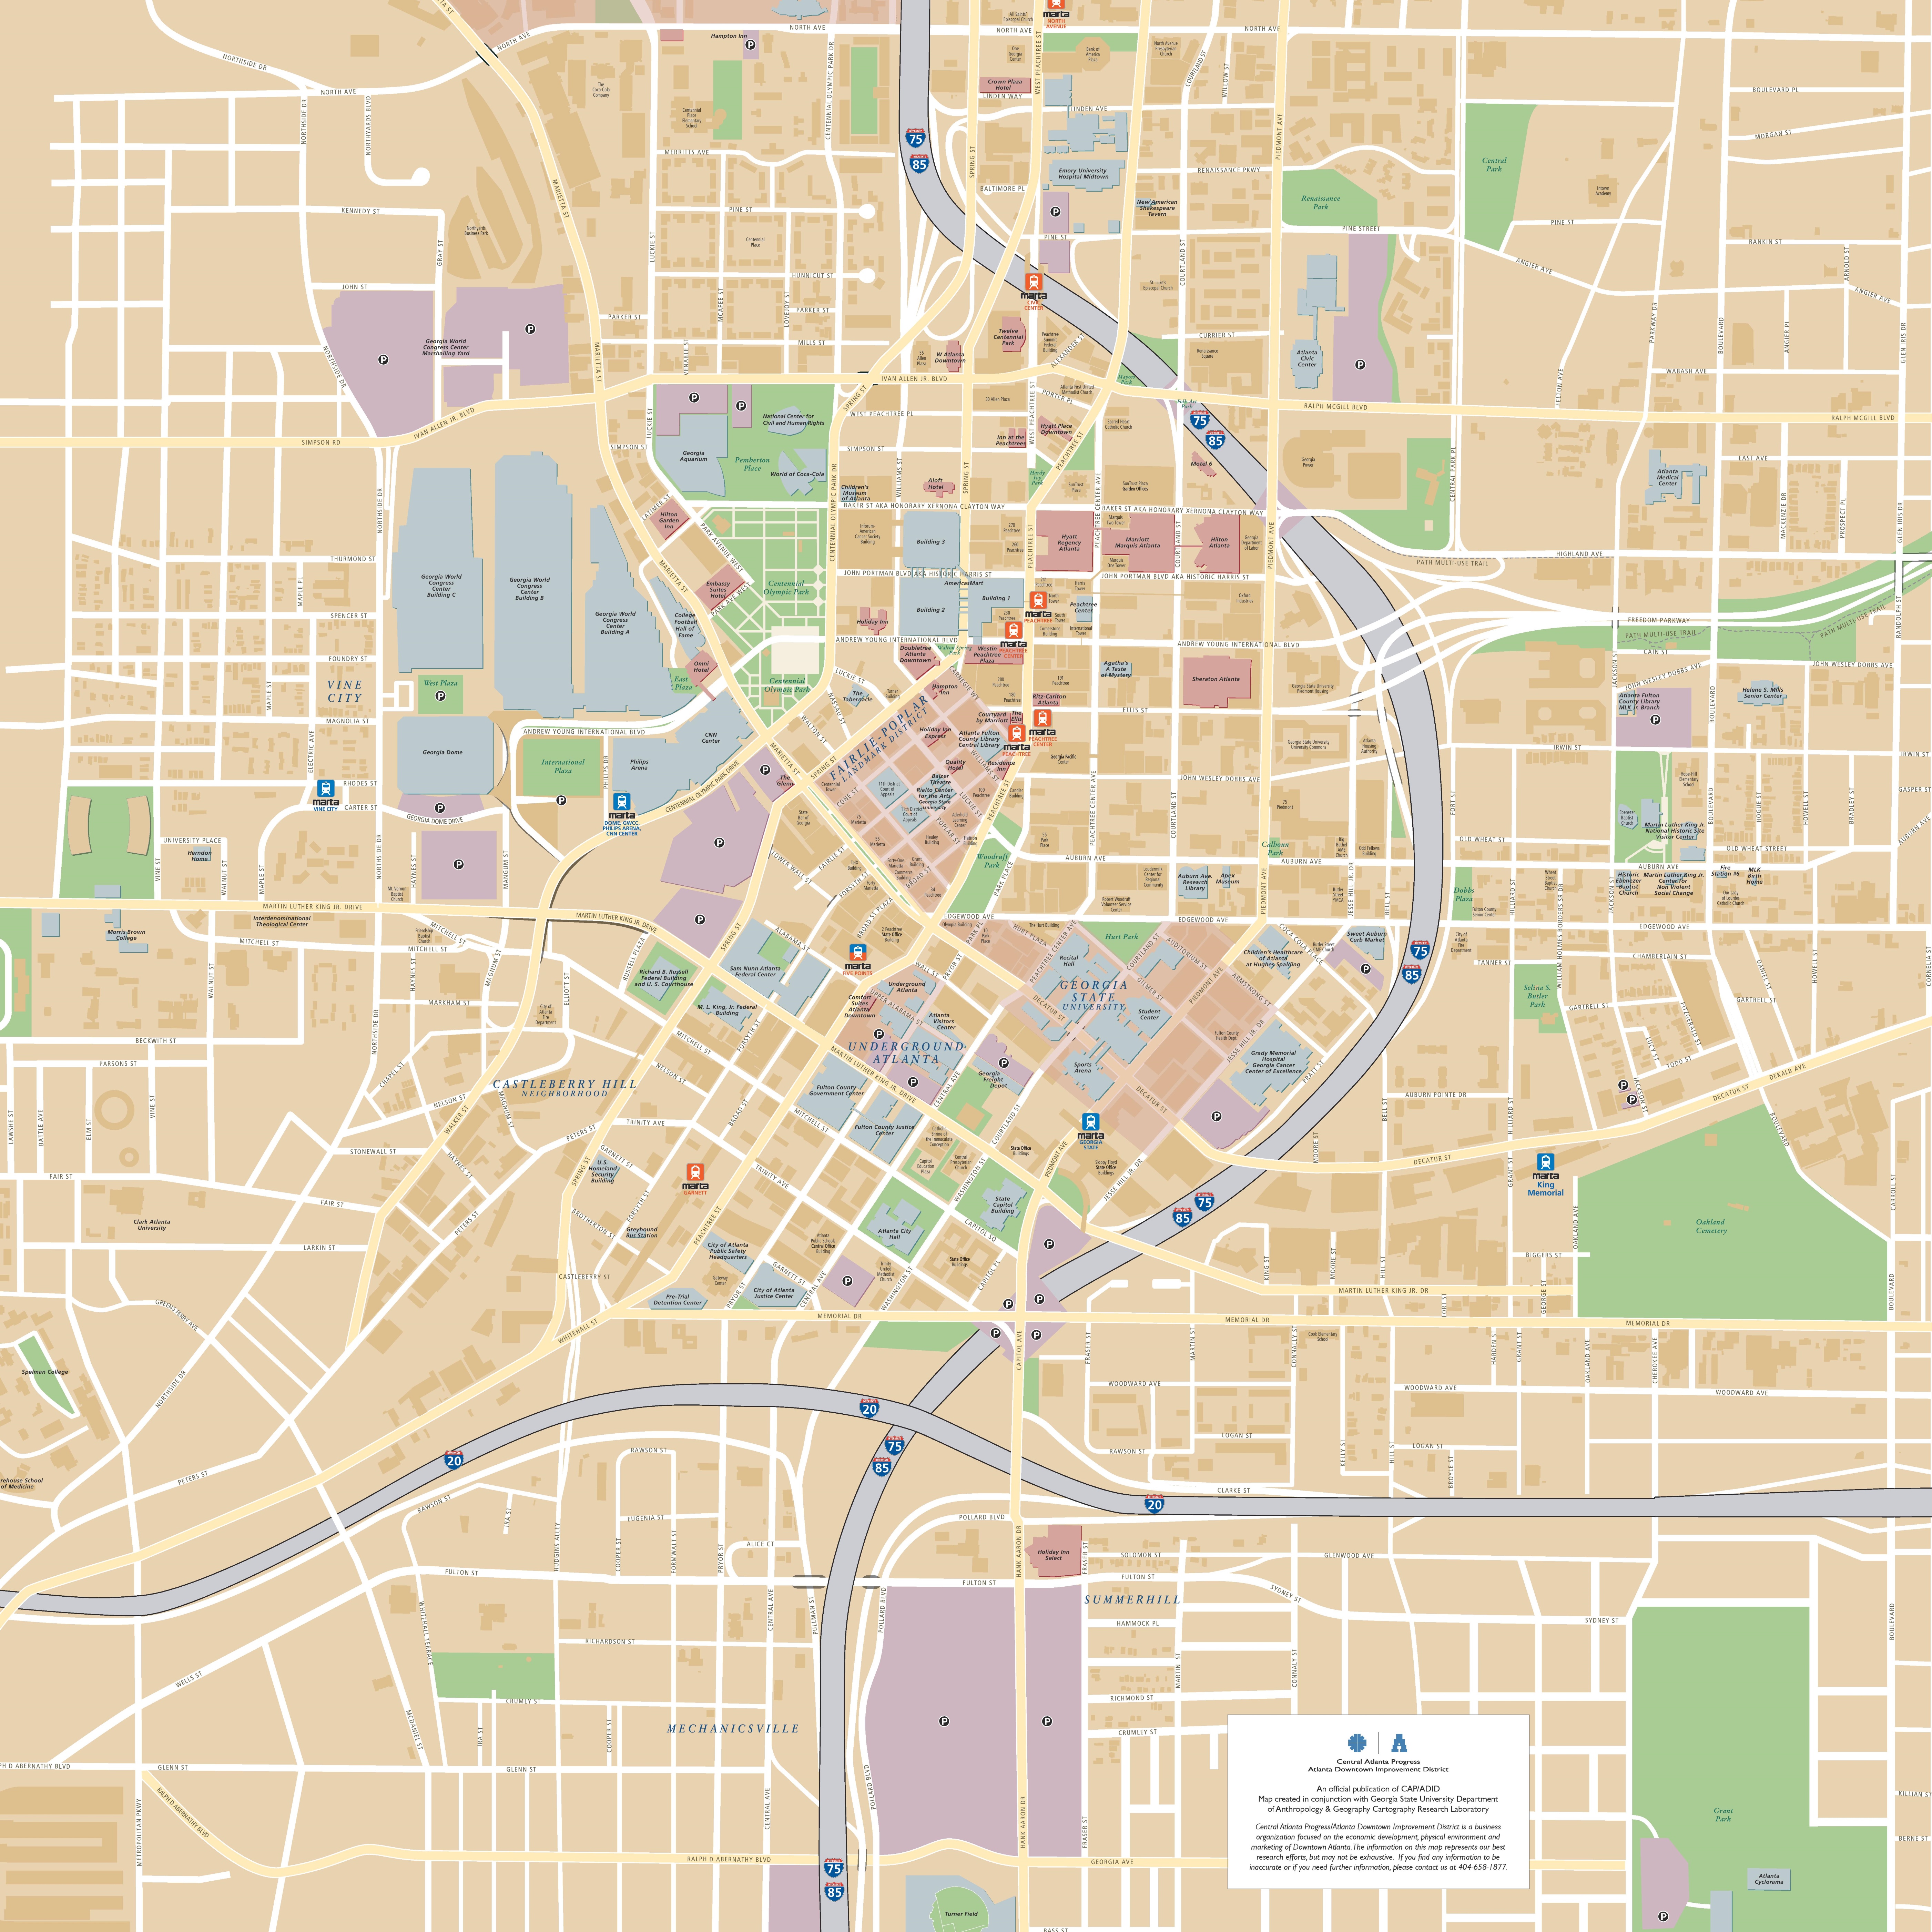 Atlanta Georgia Political Map